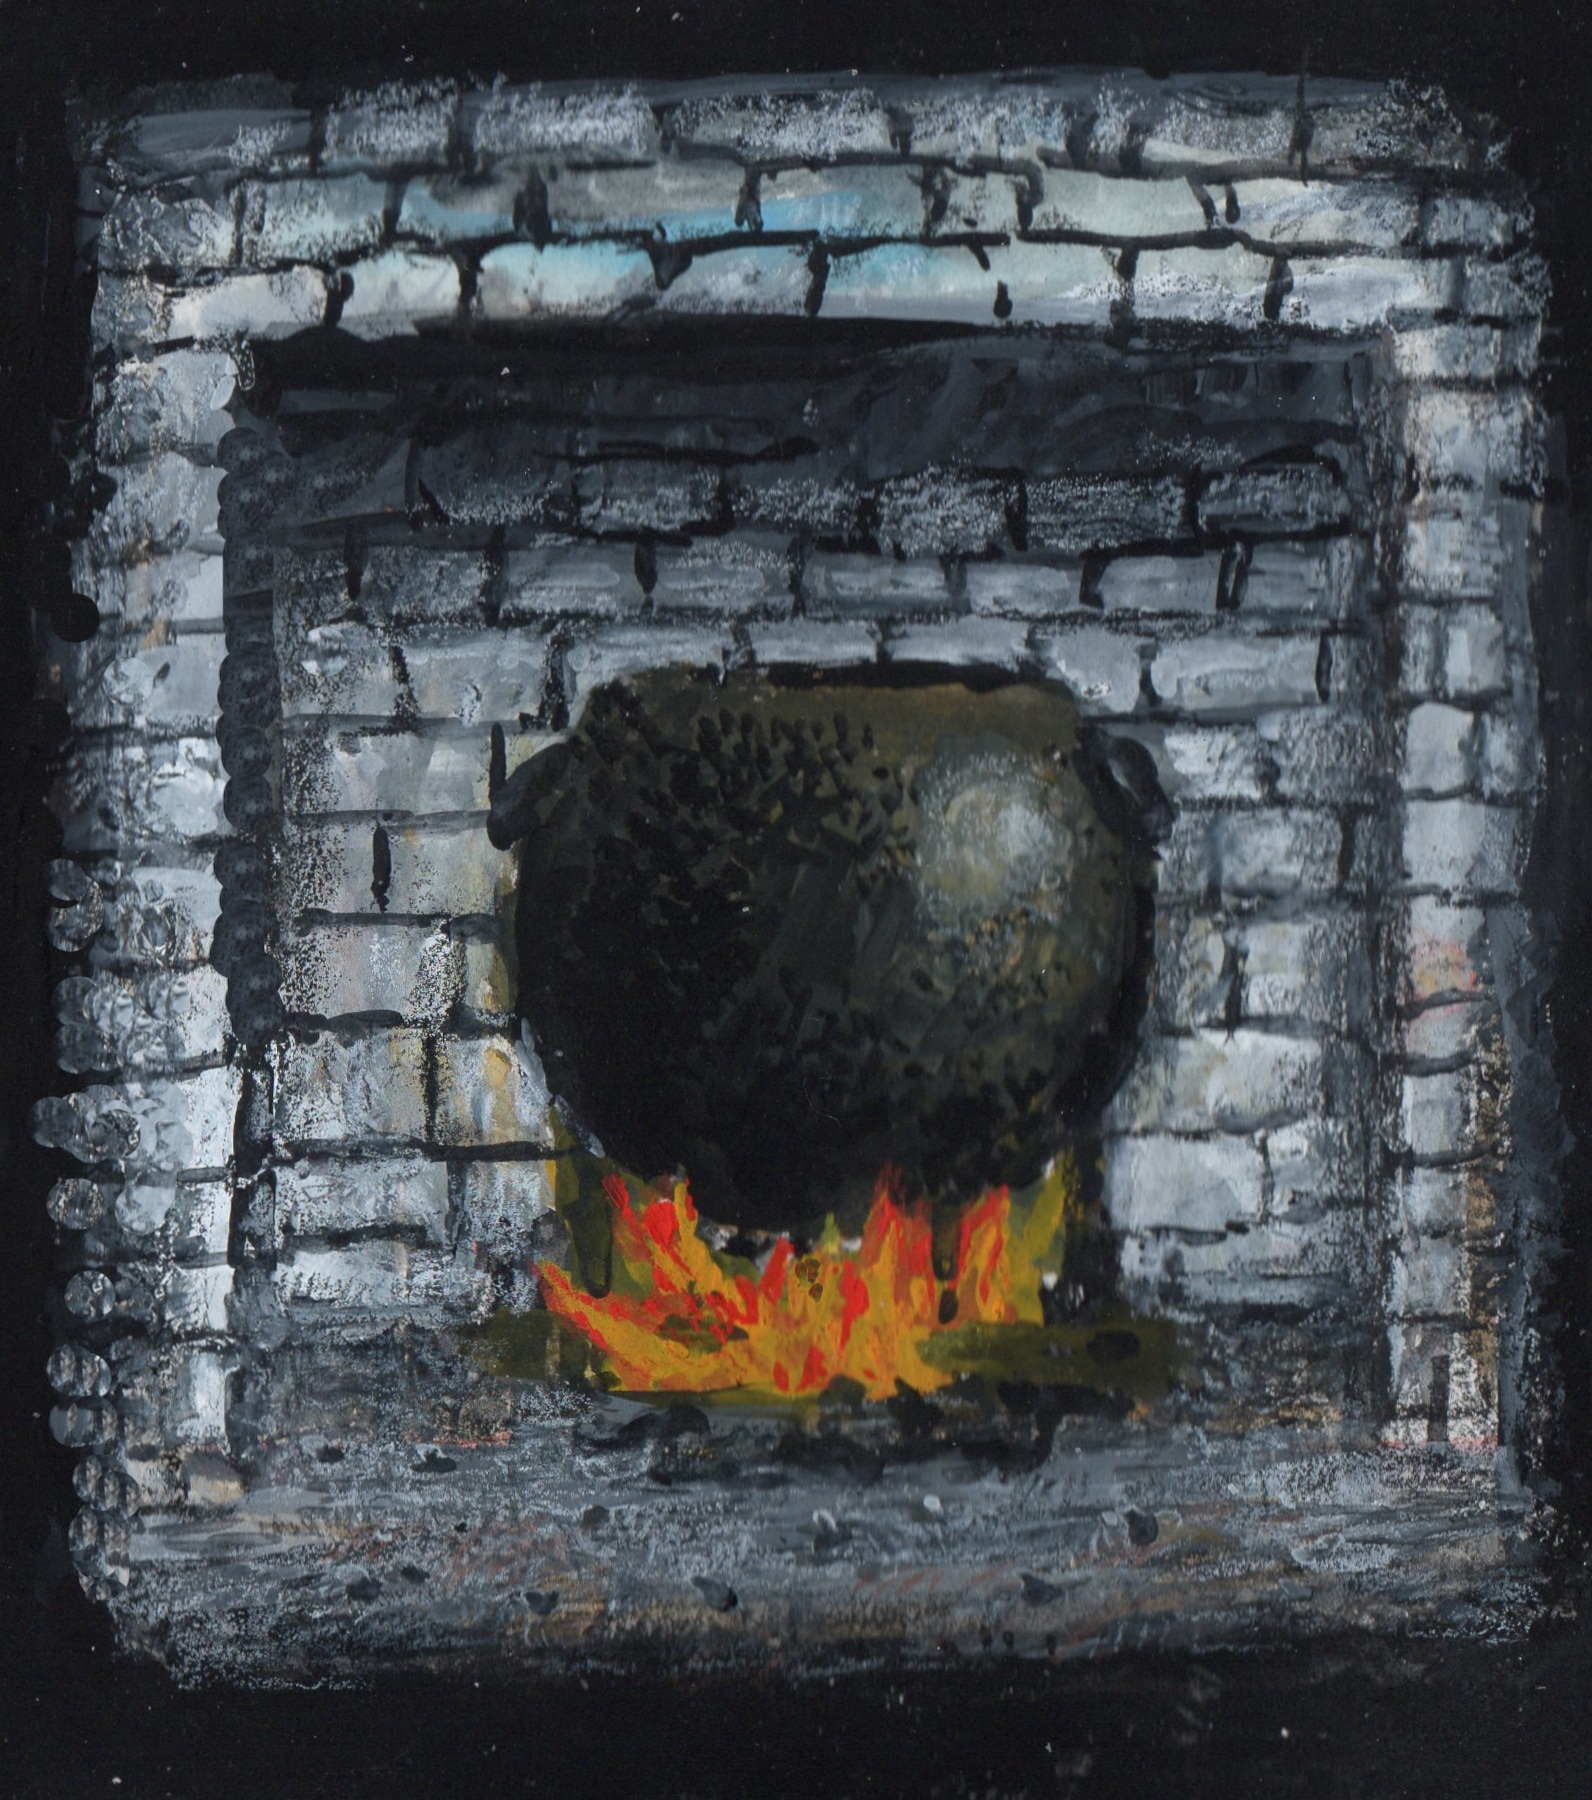 Cauldron over a Fire